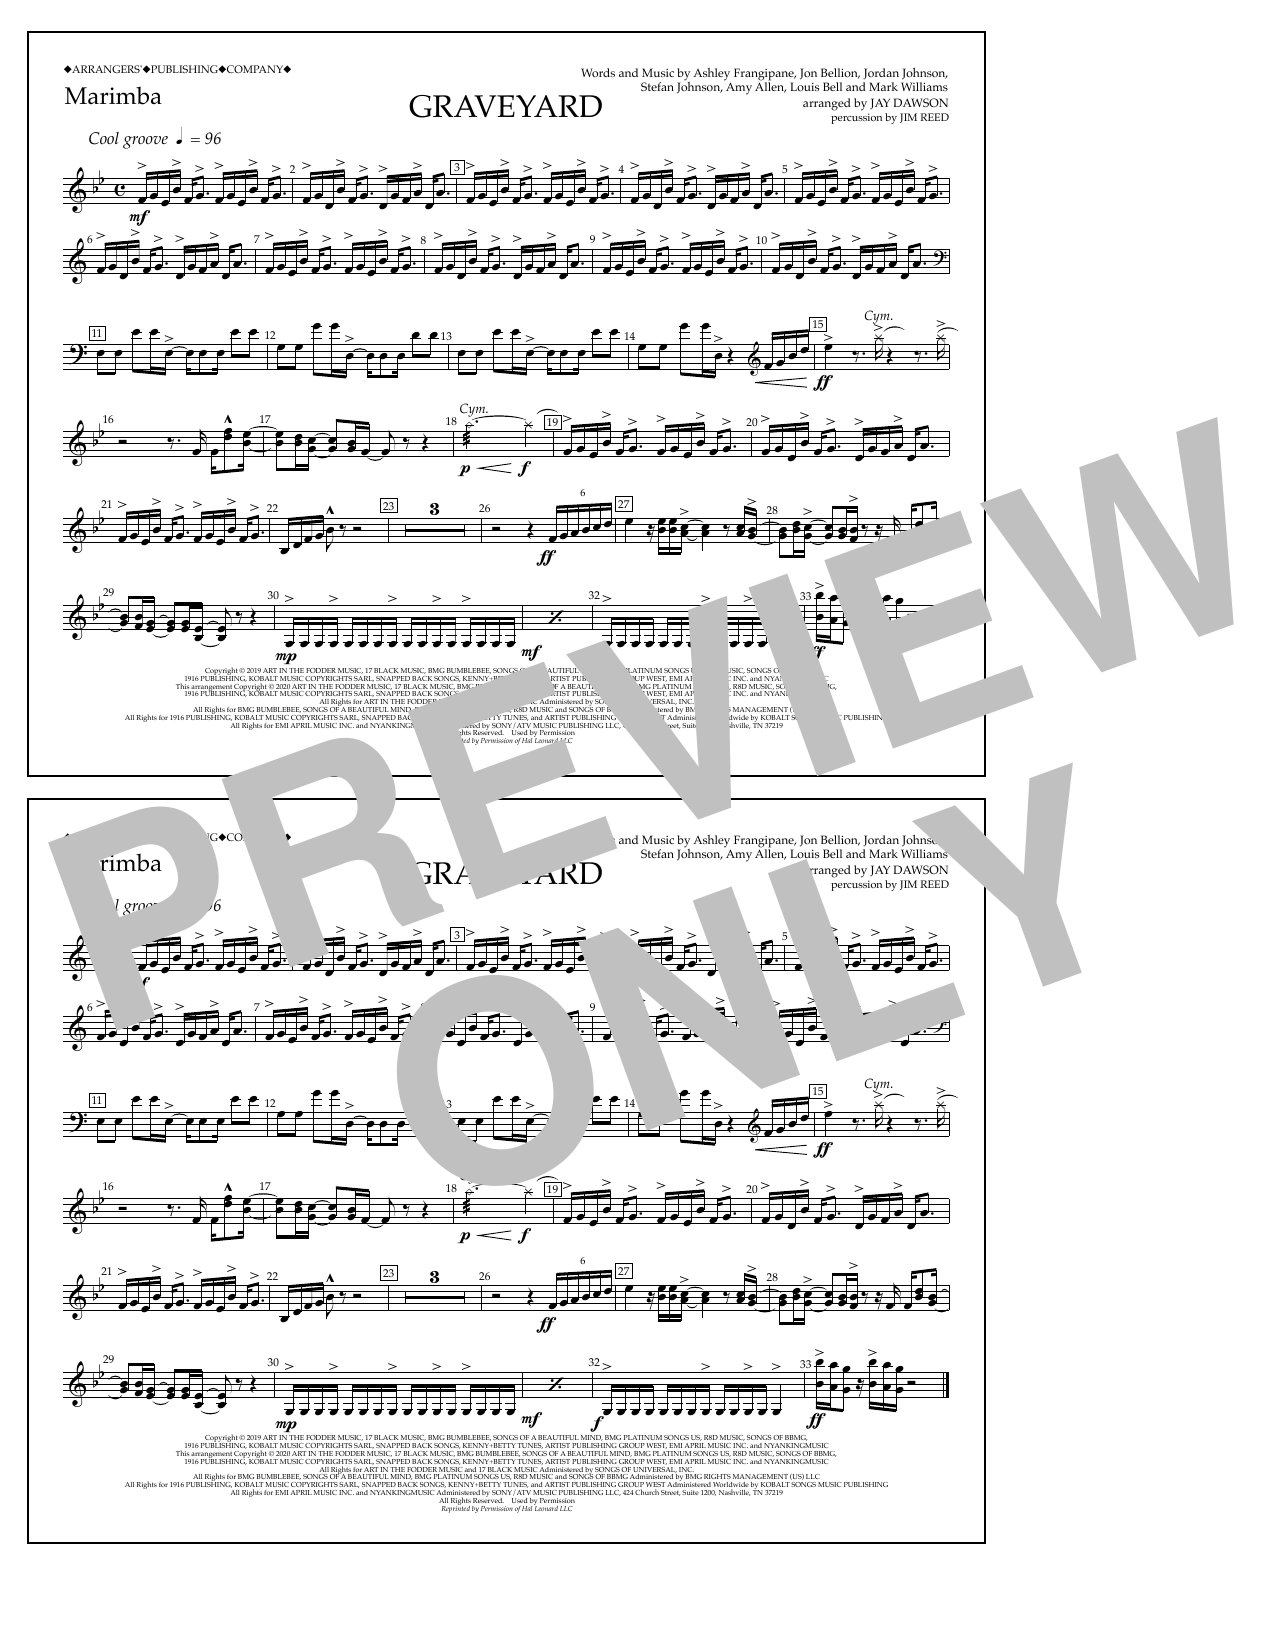 Download Halsey Graveyard (arr. Jay Dawson) - Marimba Sheet Music